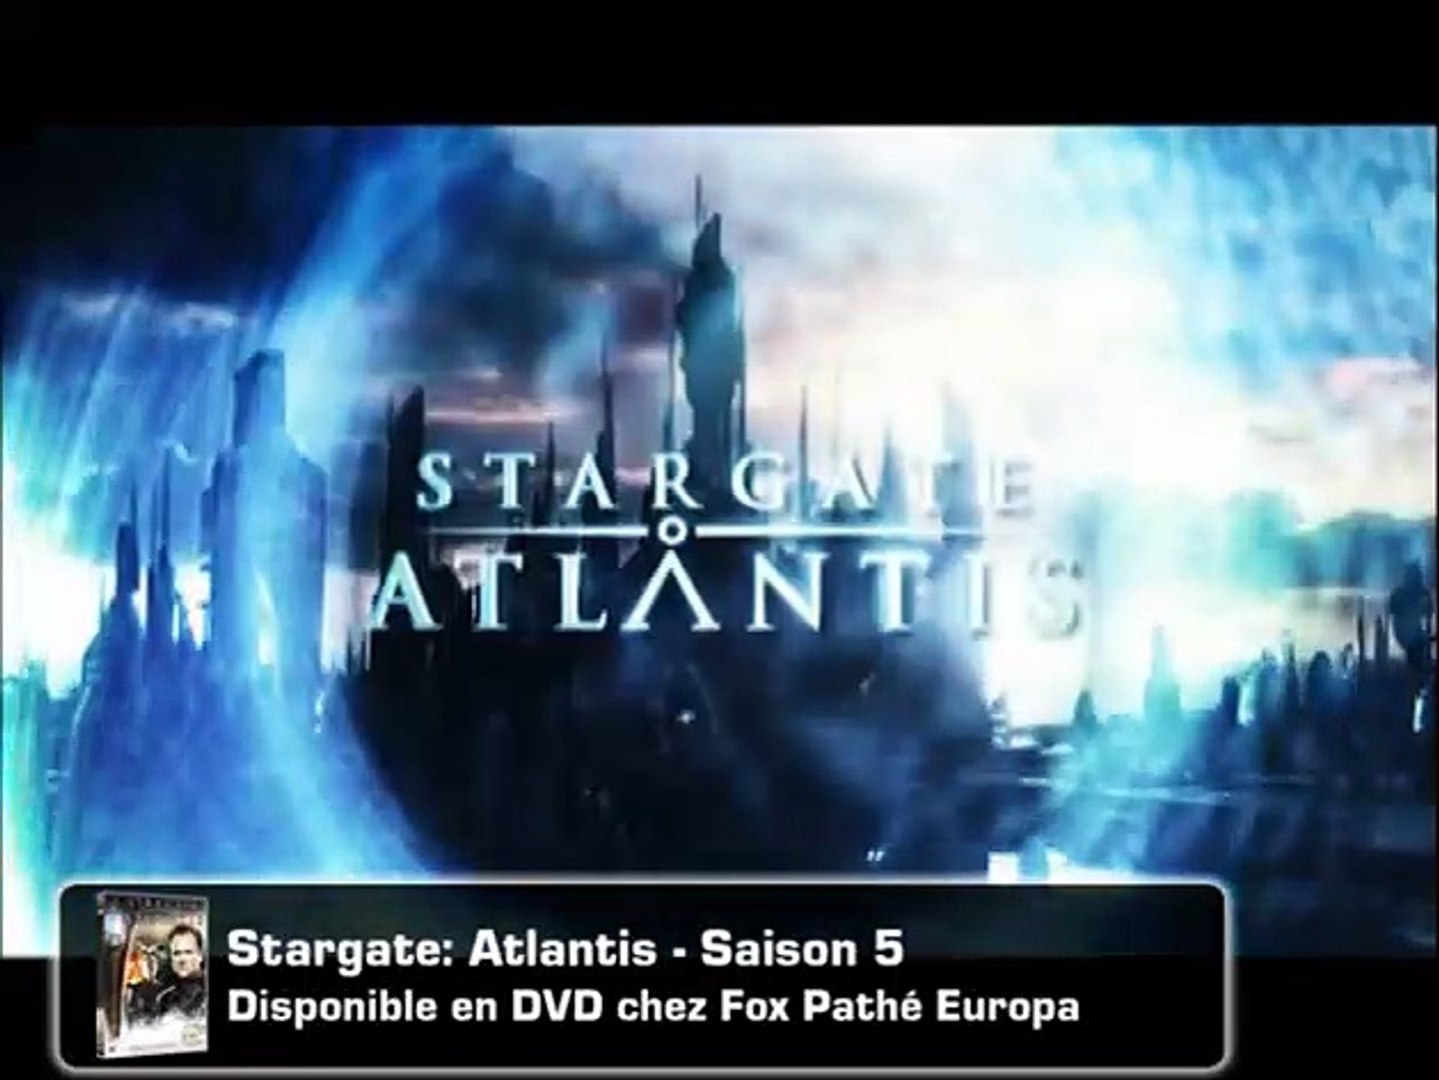 Stargate: Atlantis - saison 5 Extrait vidéo VF - Vidéo Dailymotion